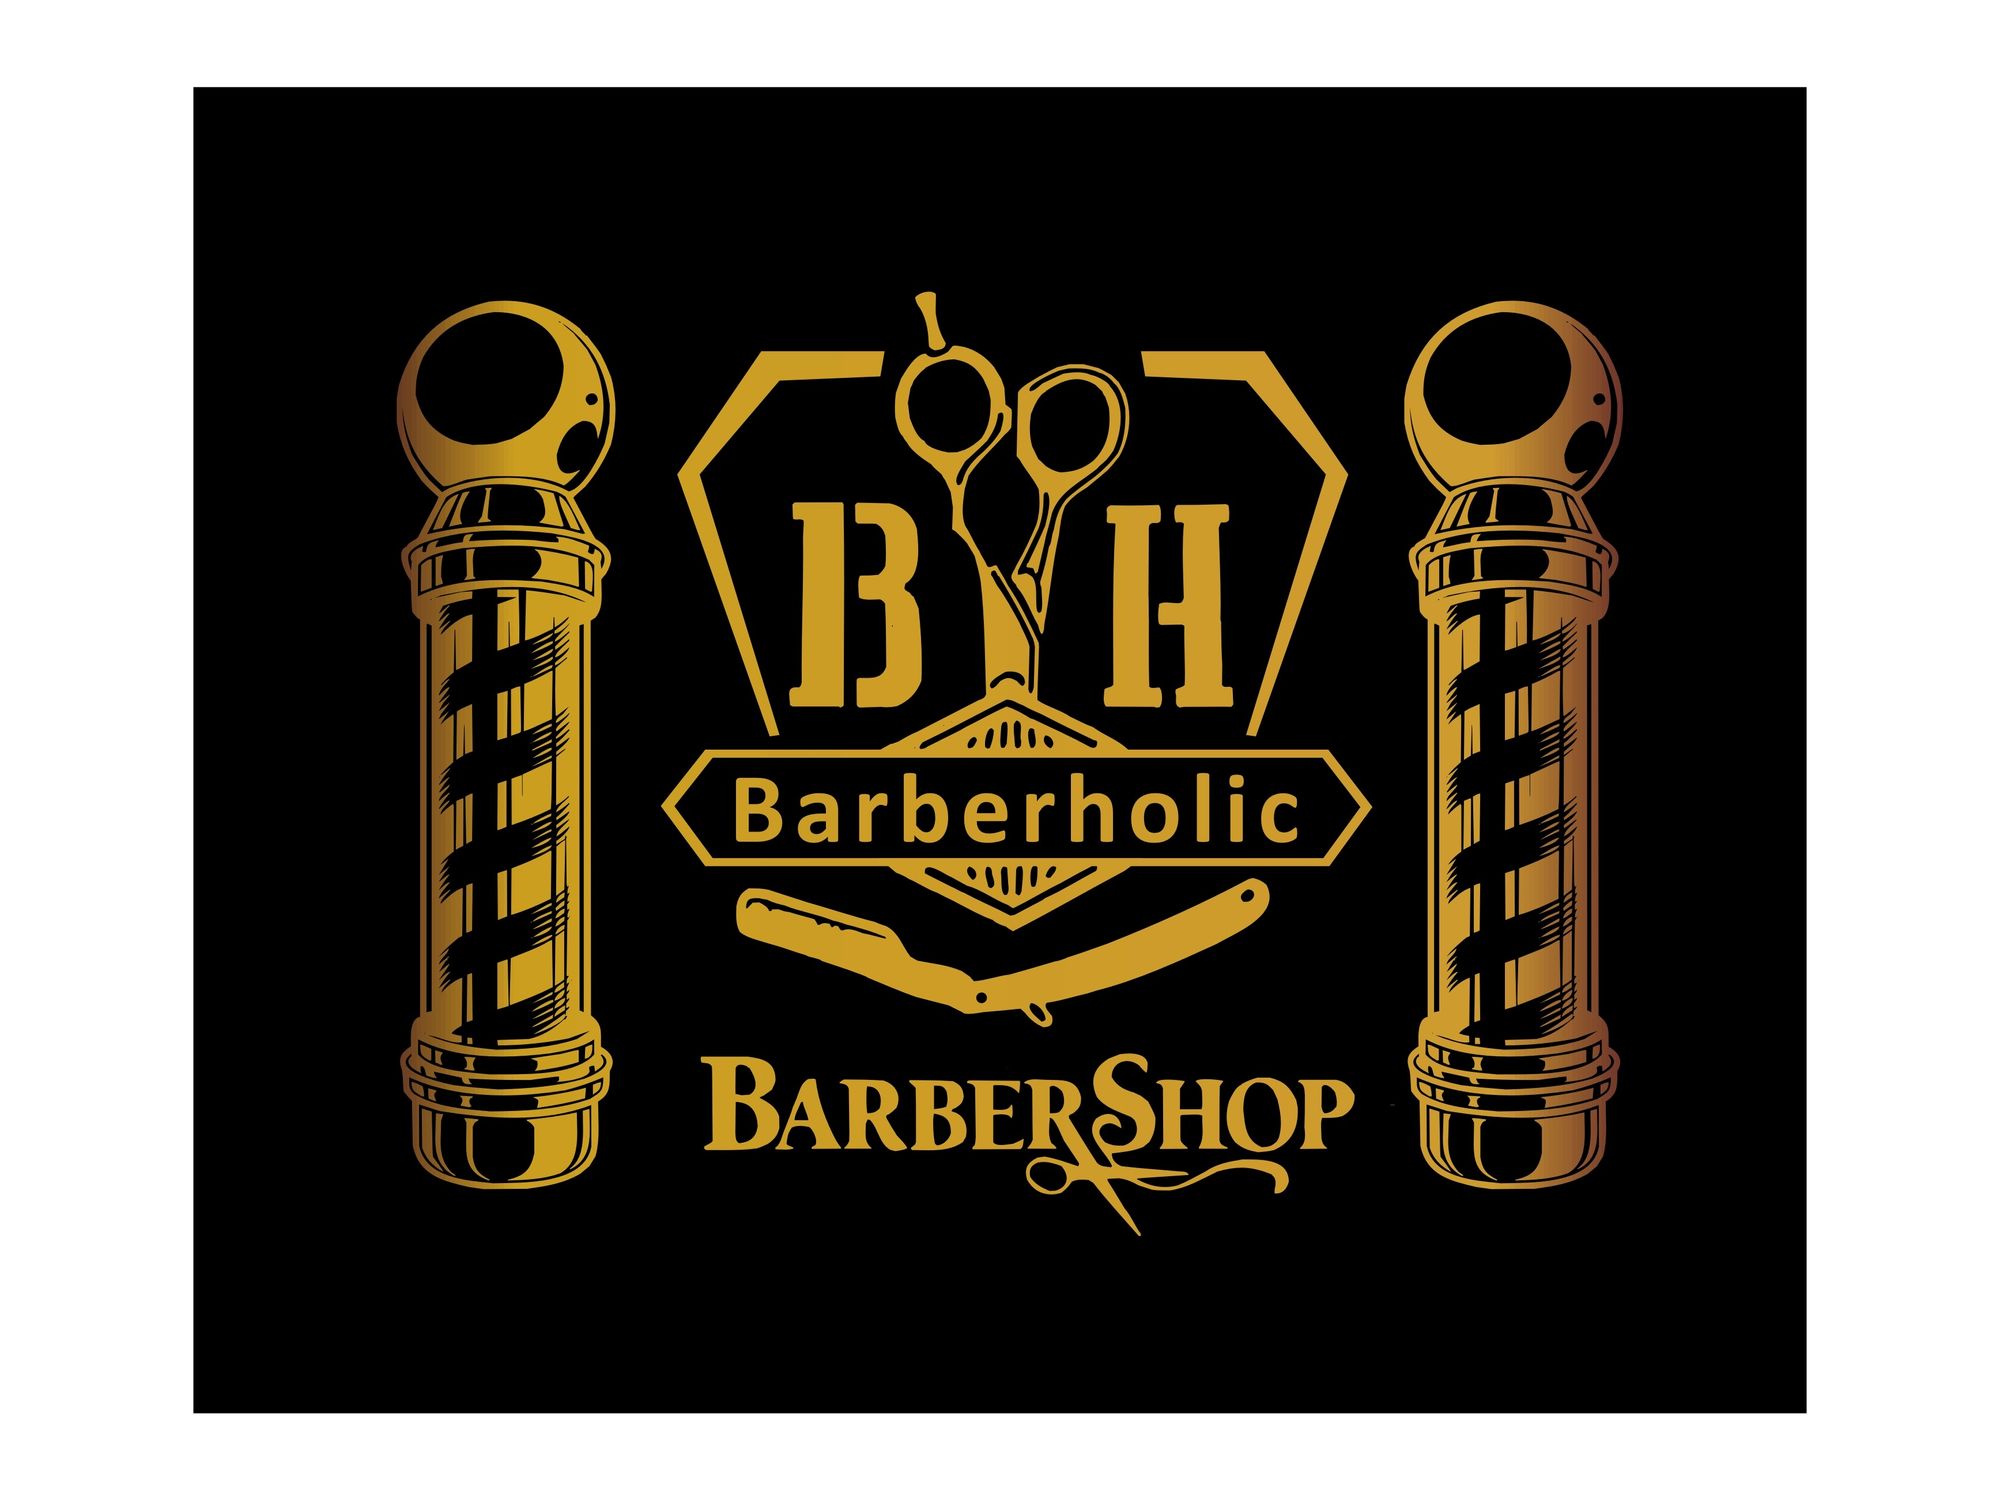 Classic, Quality Experience - Barberholic Barbershop